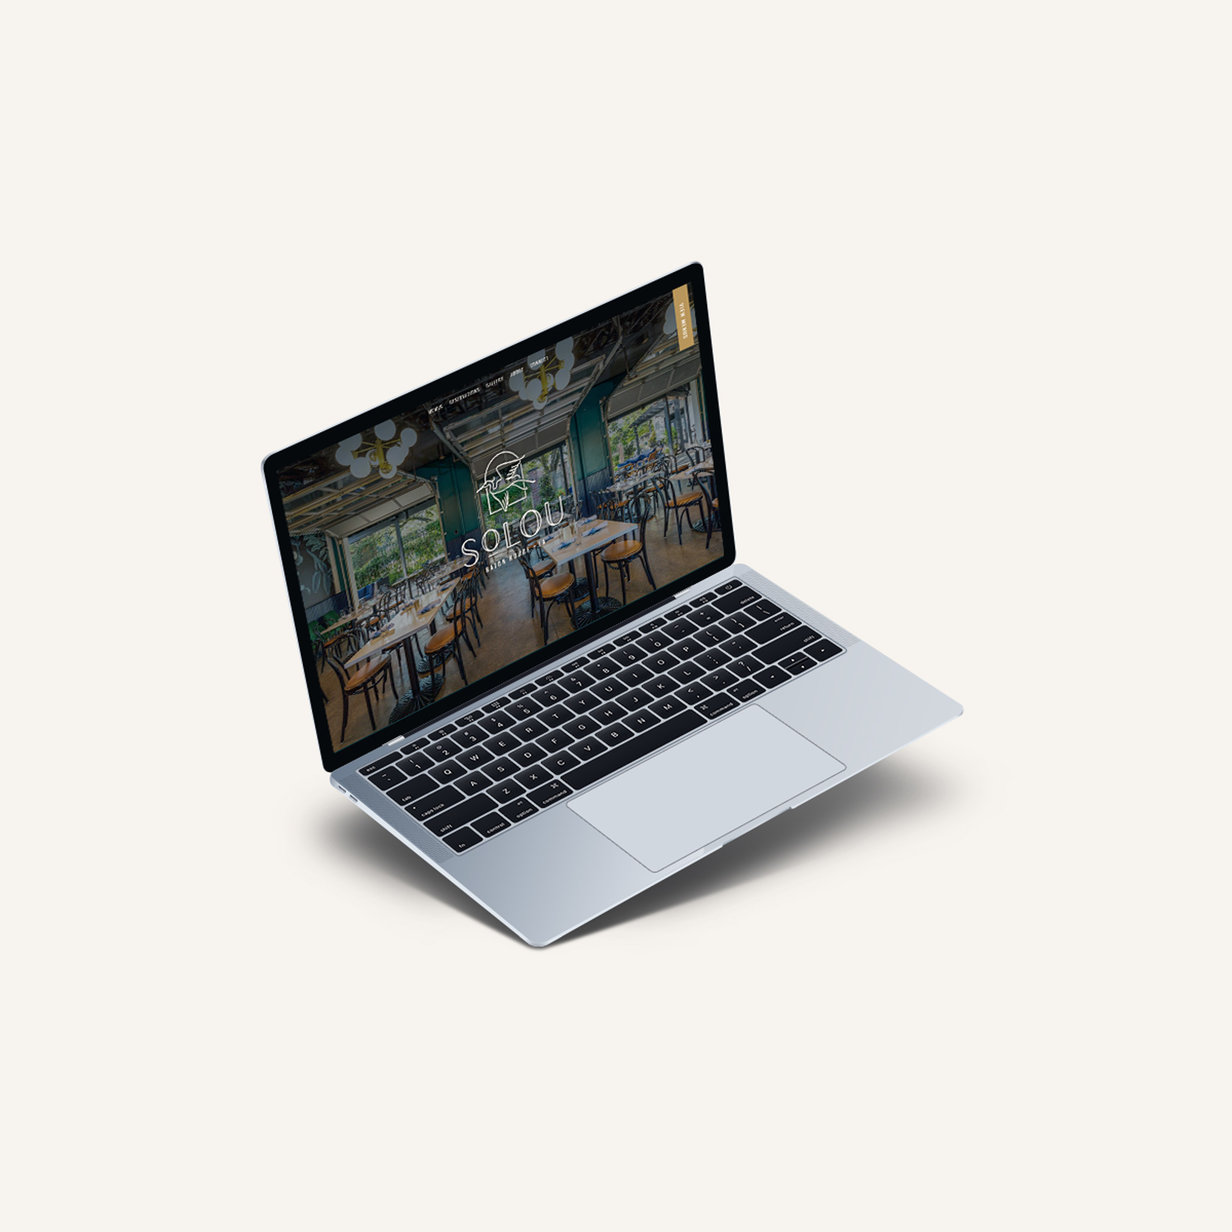 So Lou Website on Laptop Cream Background